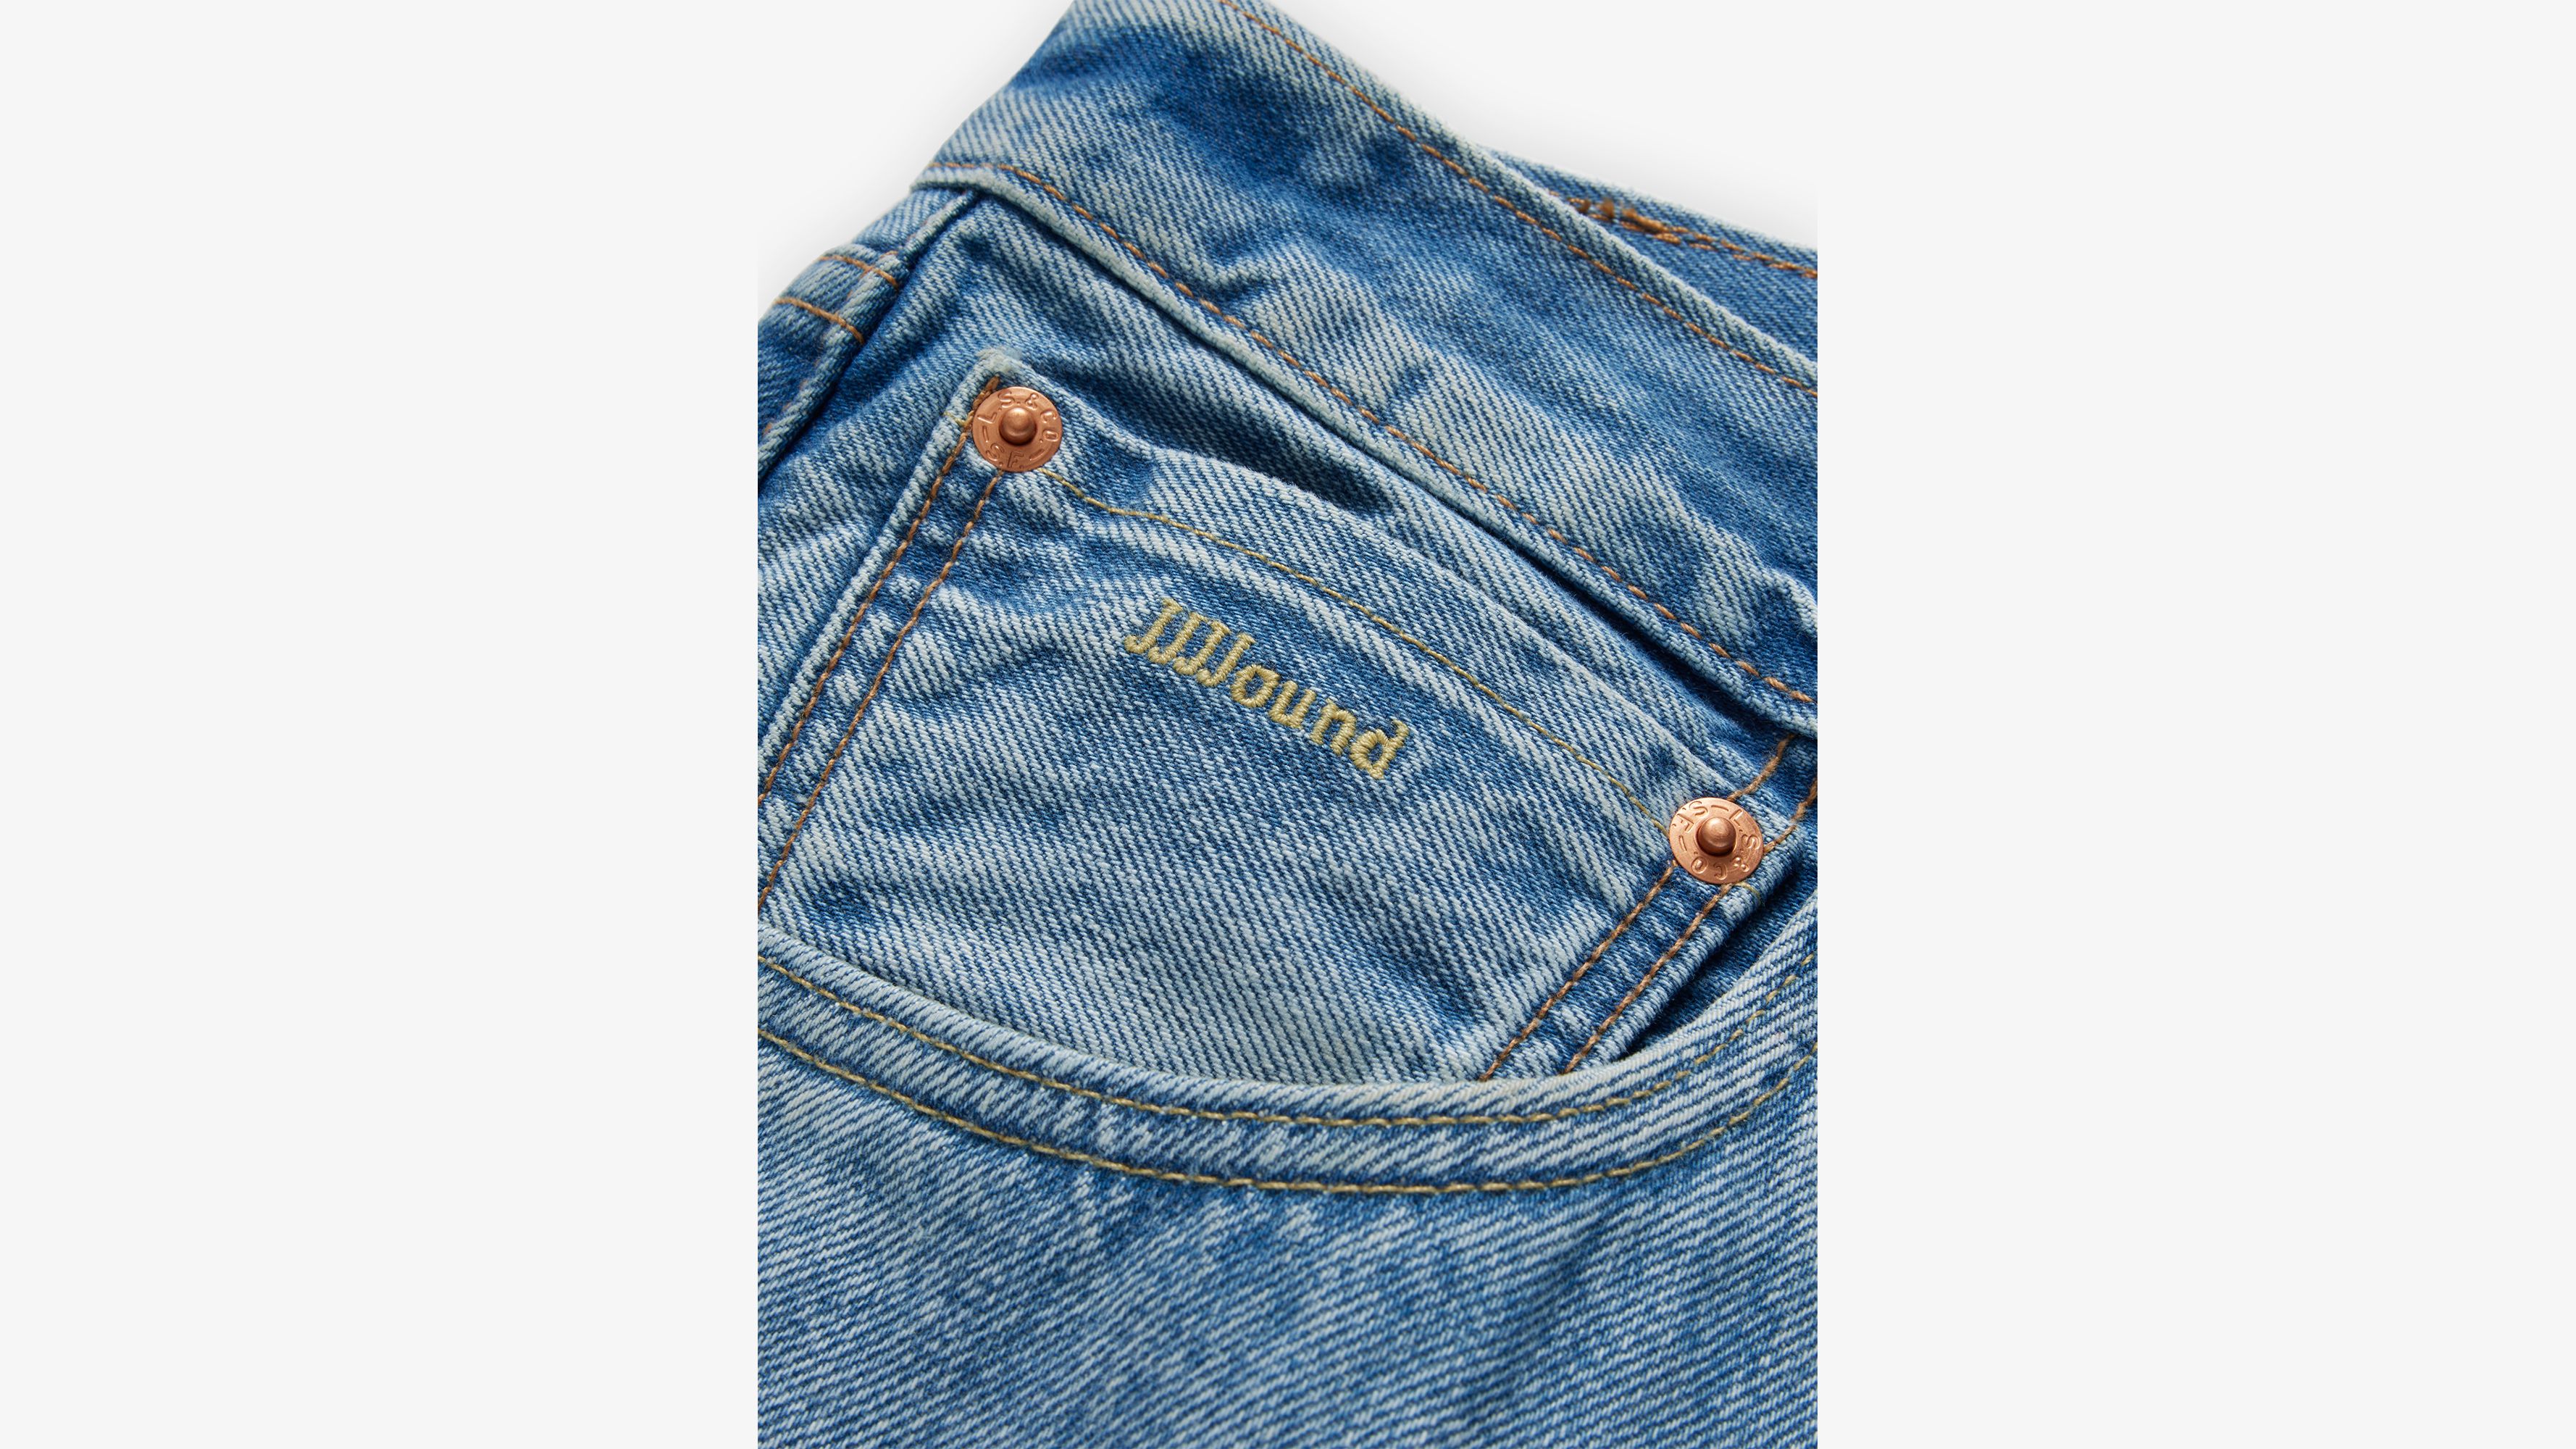 Levi's® X Jjjjound 501® '93 Original Fit Jeans - Medium Wash